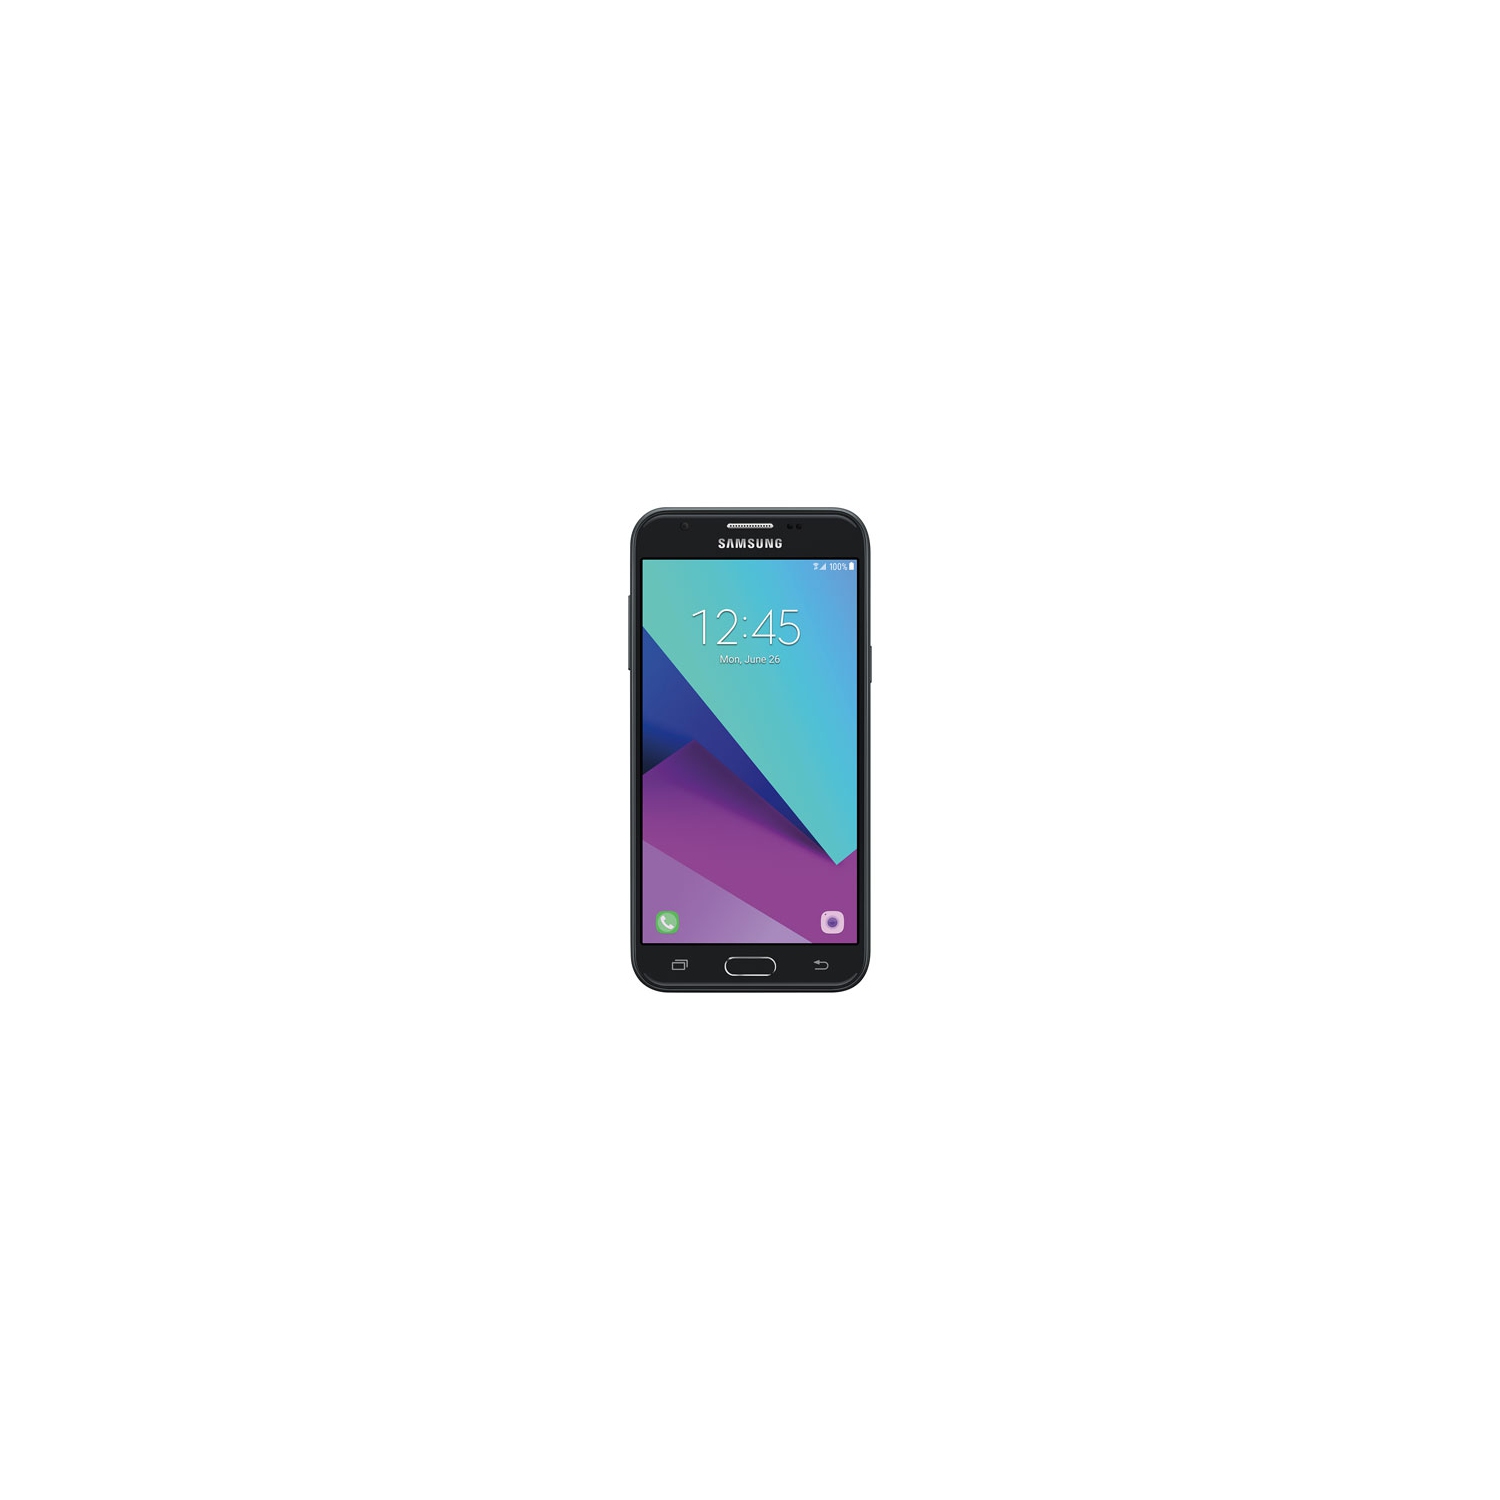 Refurbished (Good) - Samsung Galaxy J3 Prime 16GB - Black - Unlocked